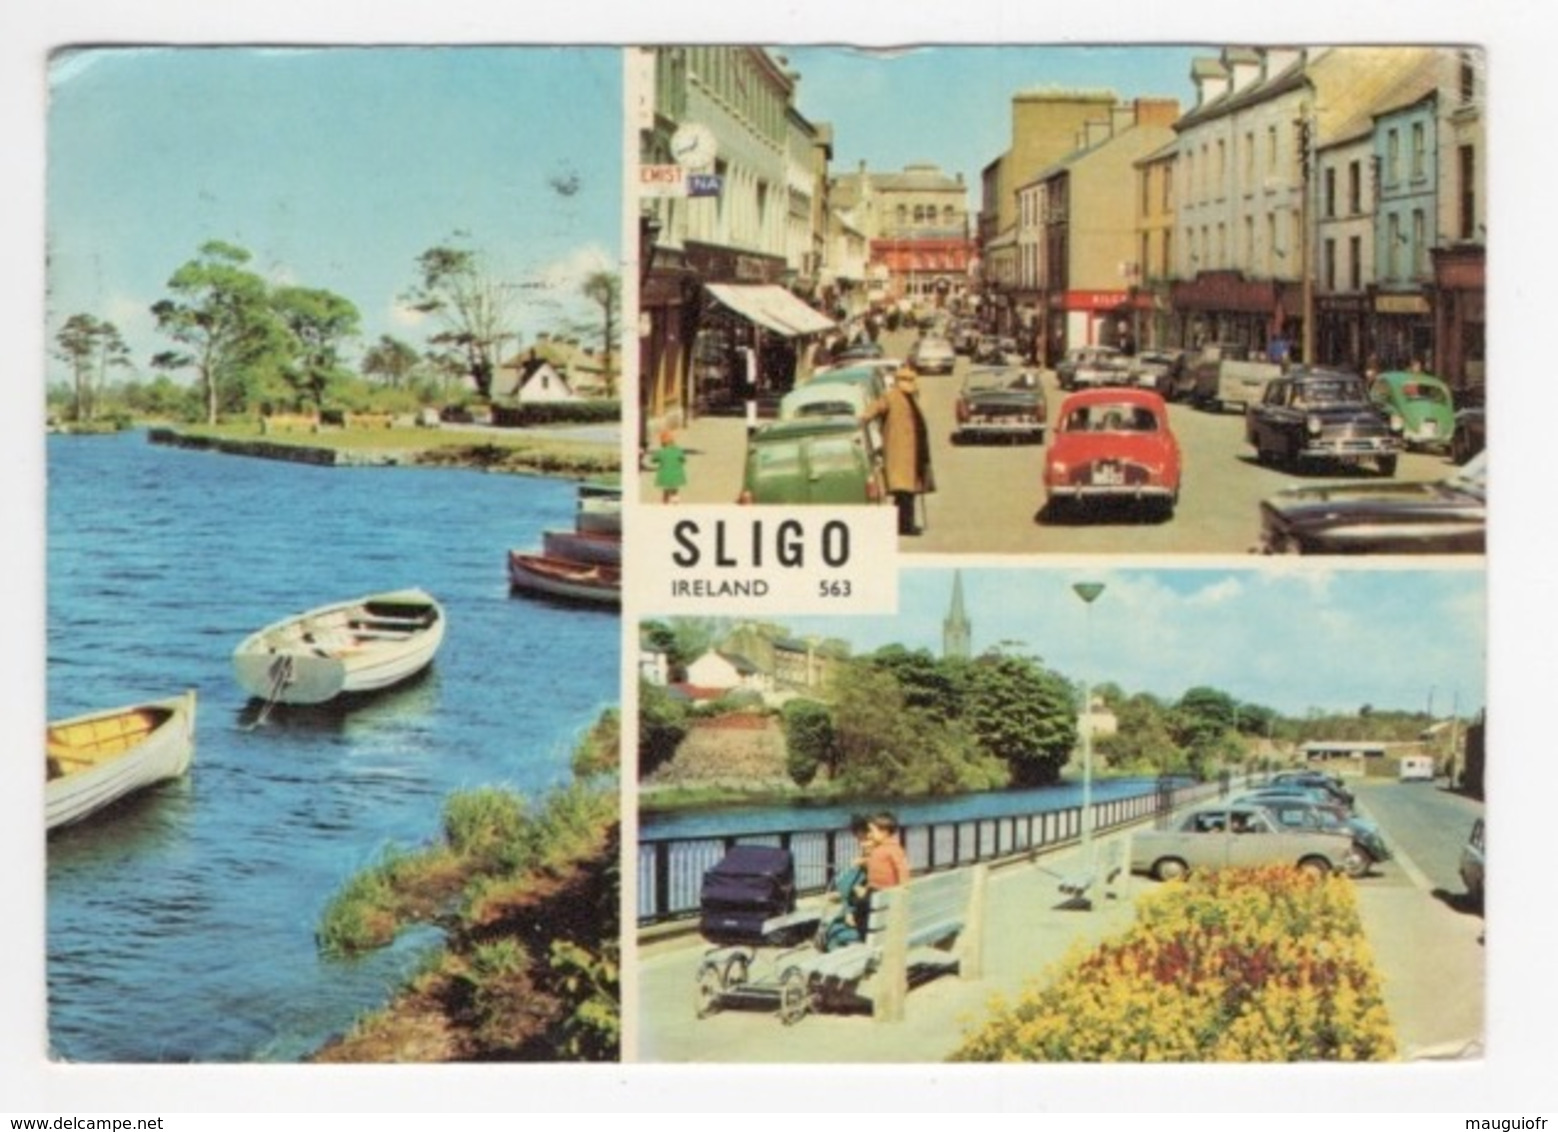 DF / IRLANDE / SLIGO / DIVERS ASPECTS DE LA VILLE / CARTE MULTIVUES / 1973 - Sligo